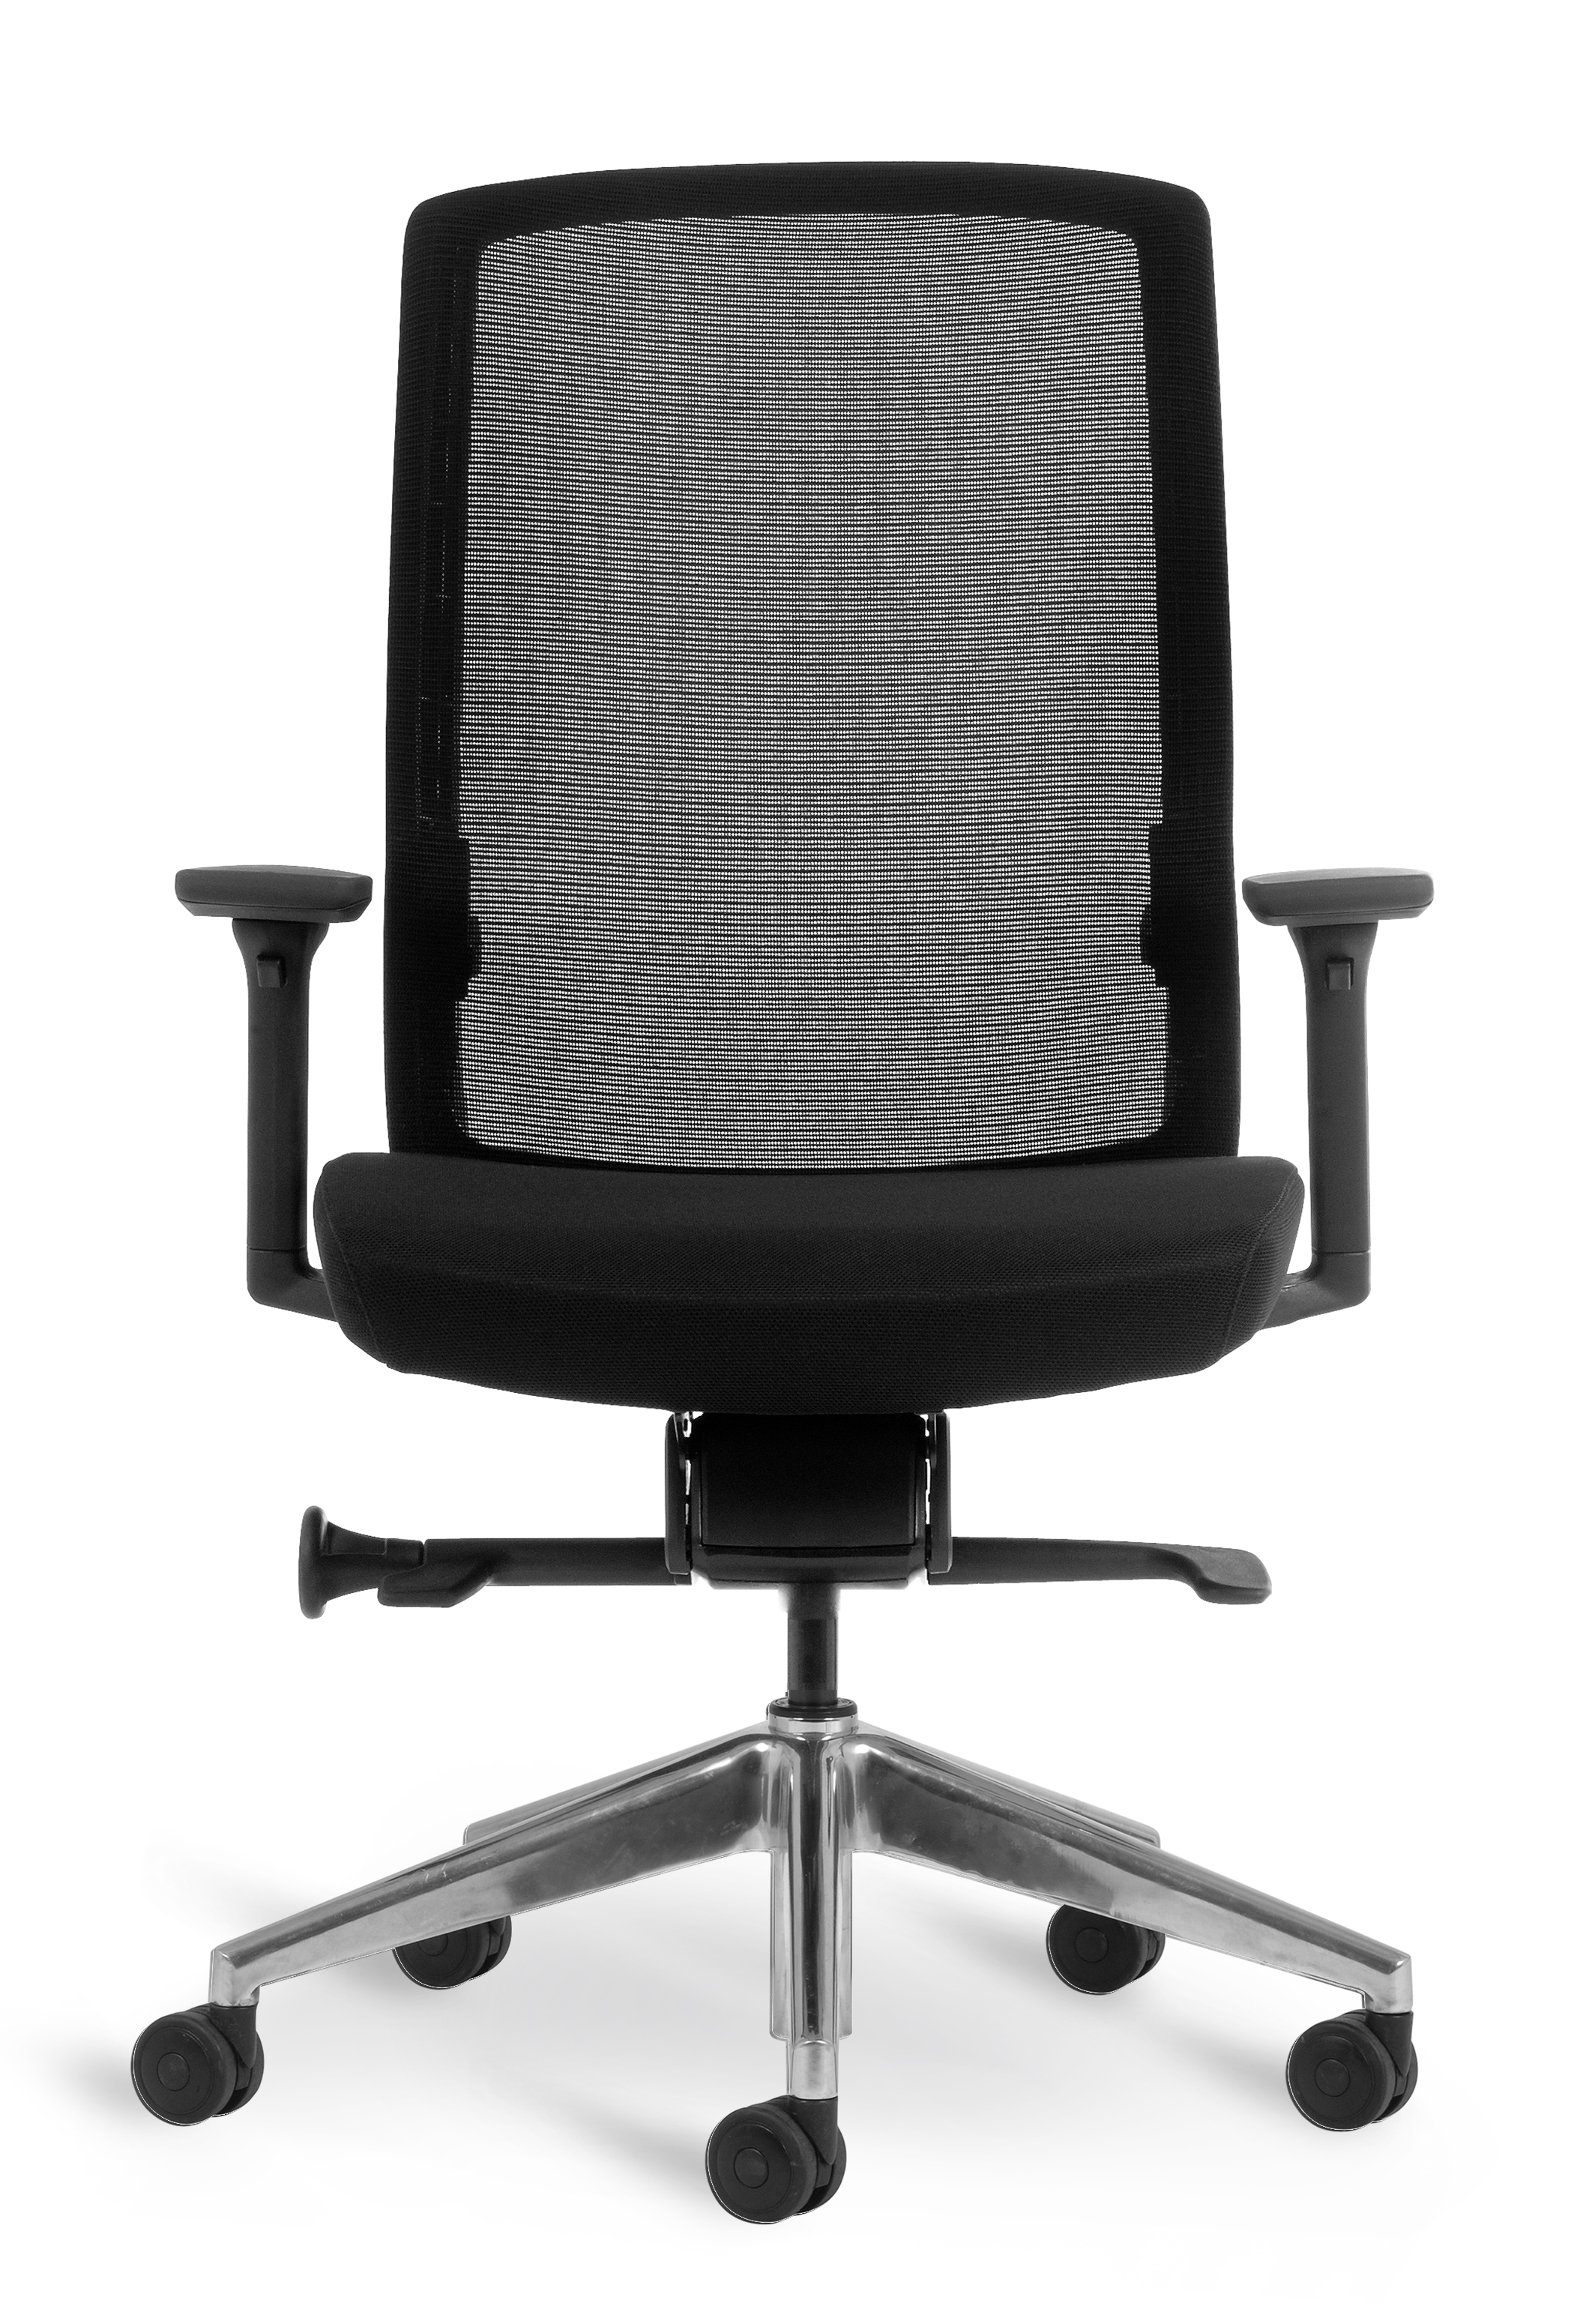 WS - J1 task chair - Black, polished base (Front)